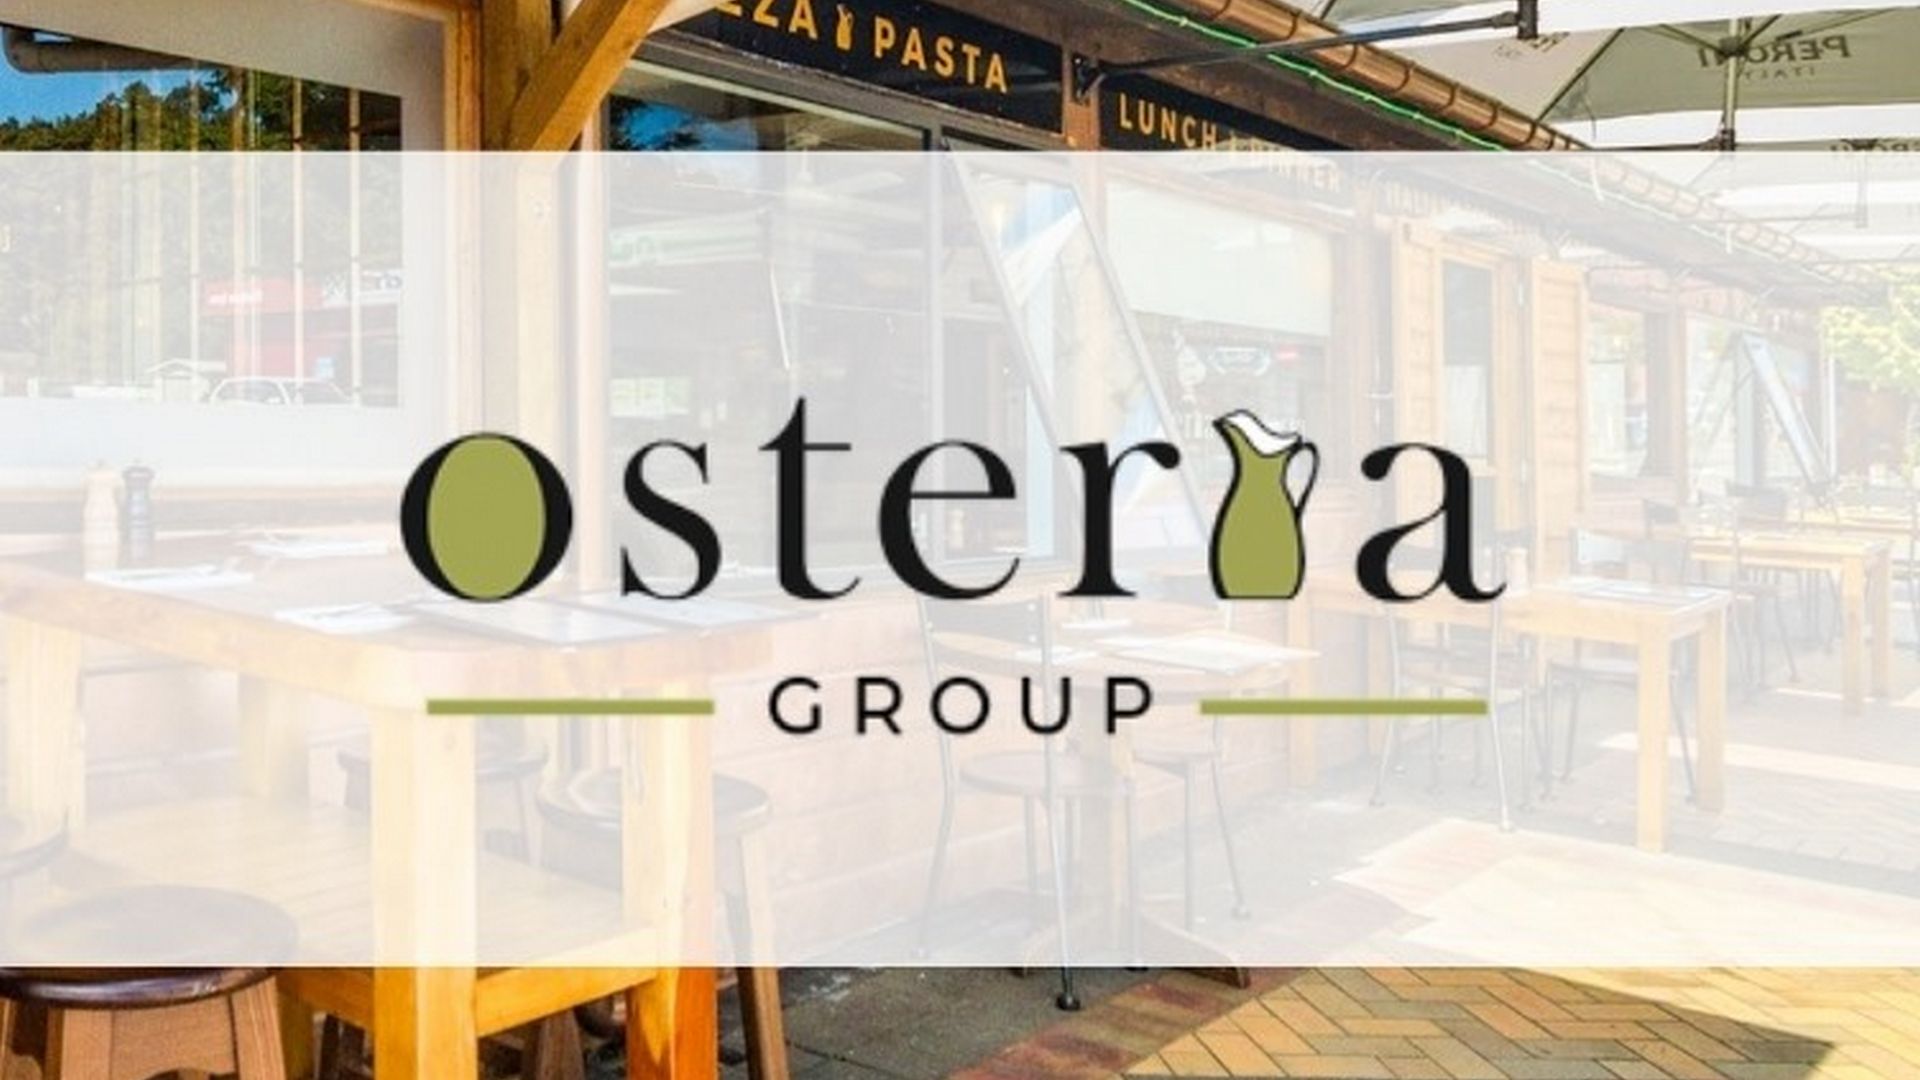 Osteria Group - Visit Ruapehu.jpg